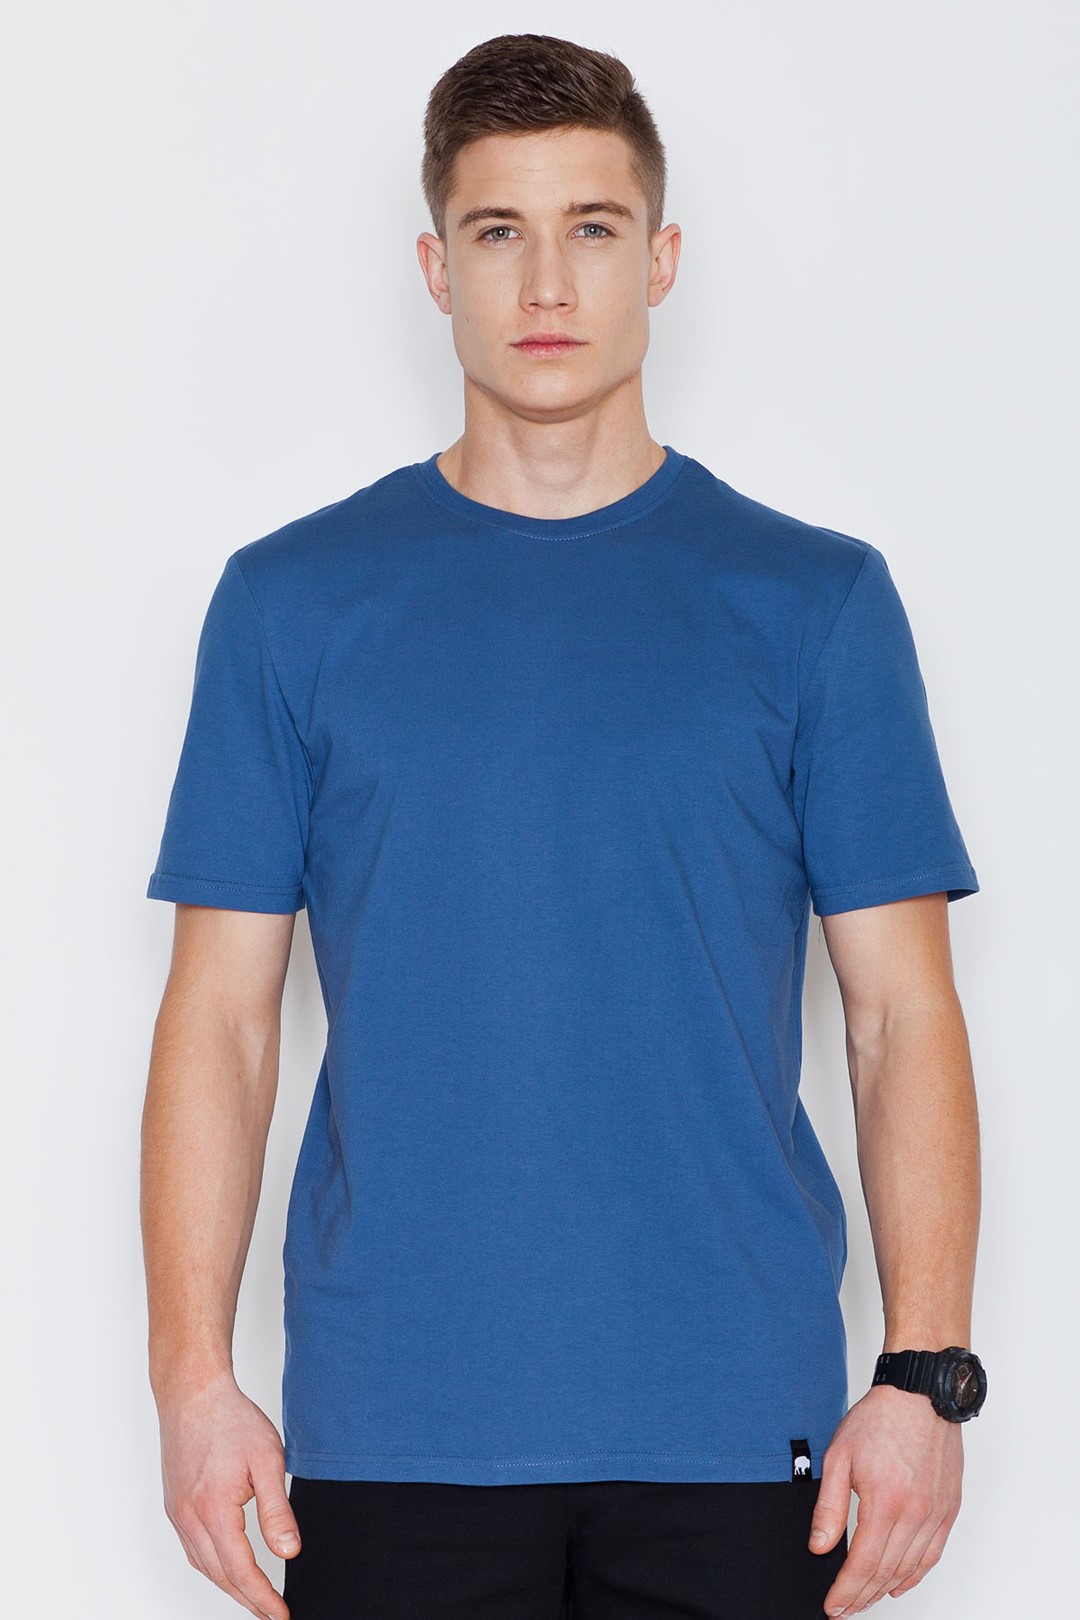 T-shirt V001 Blue S